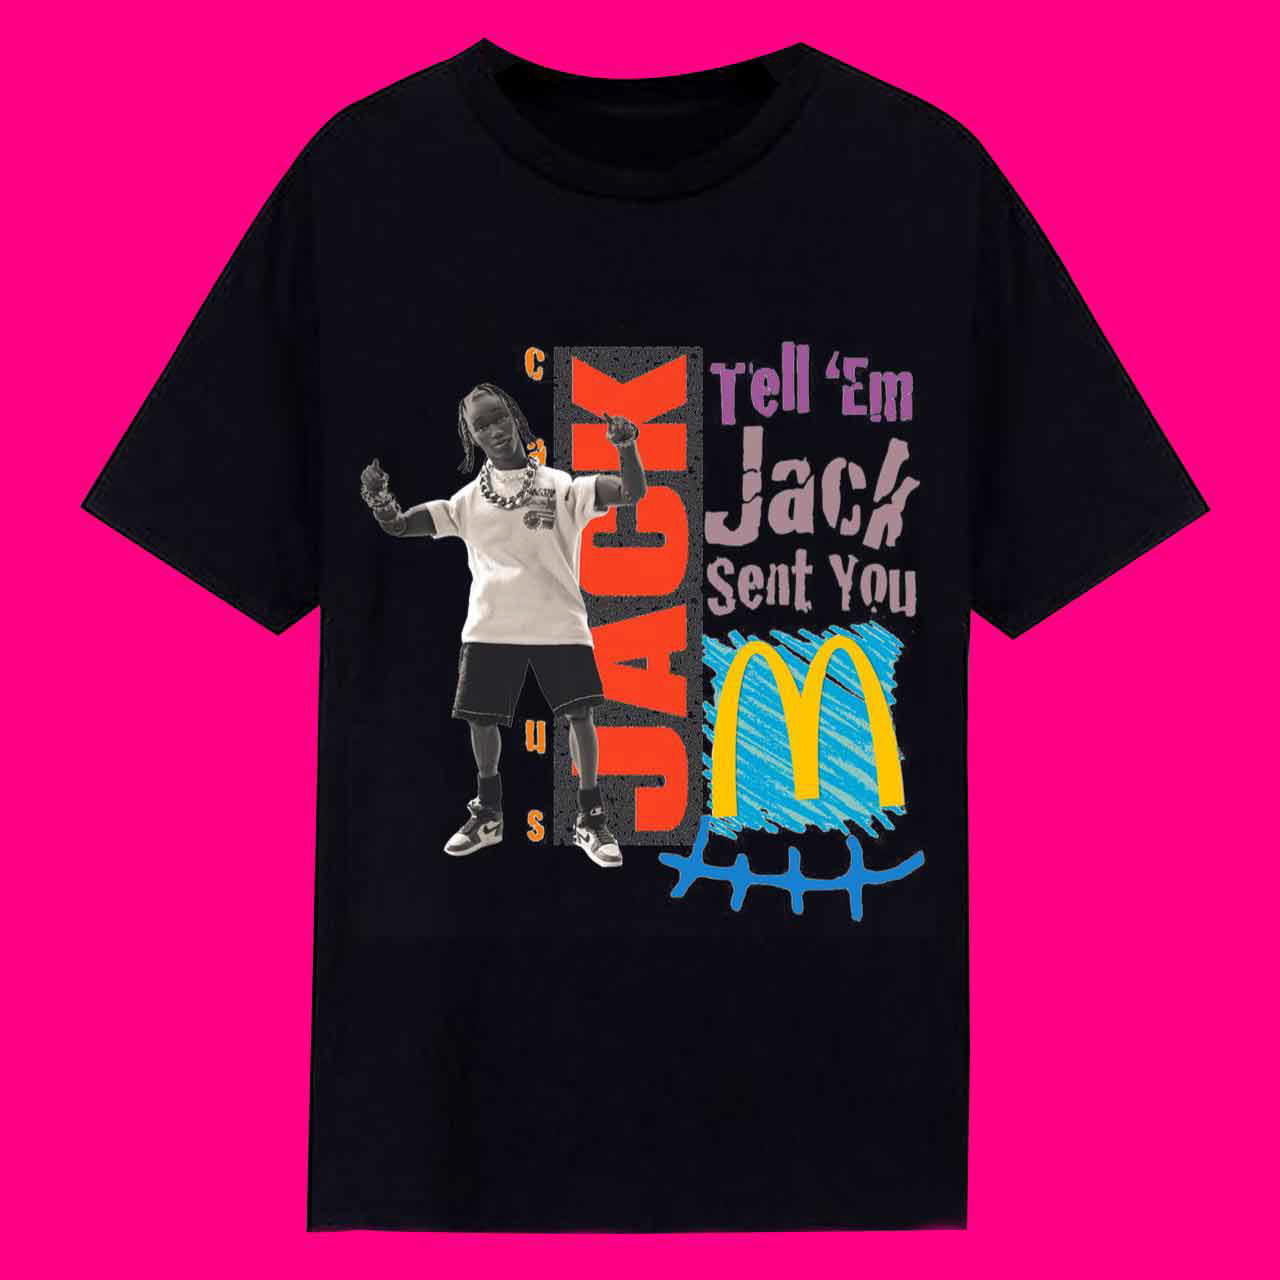 Travis Scott x McDonald’s Jack Smile II White T-Shirt